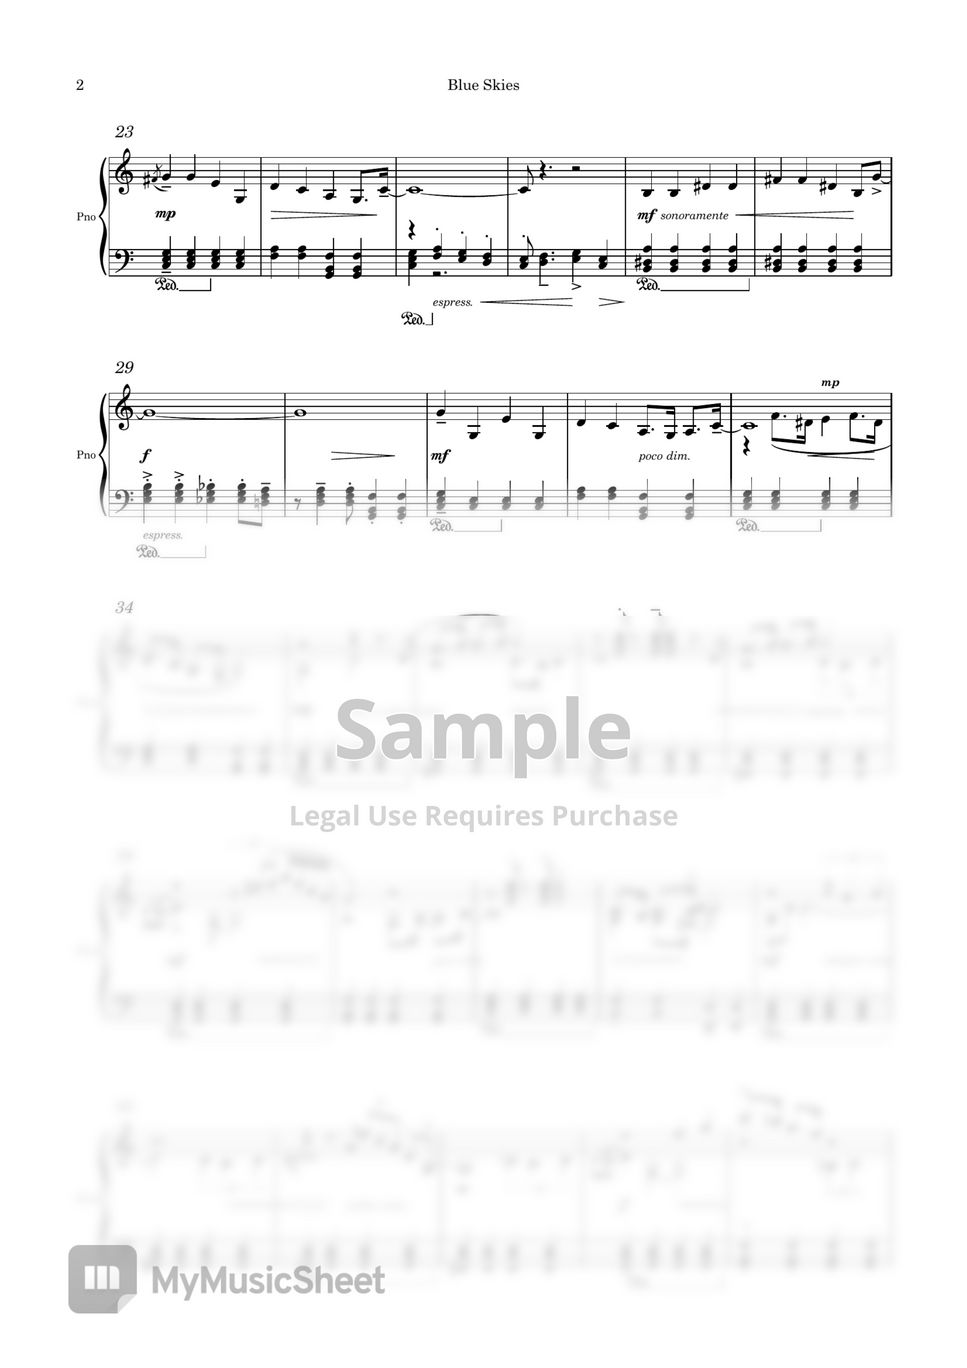 Irving Berlin - Blue Skies (Difficult Piano Arrangement) by Edora